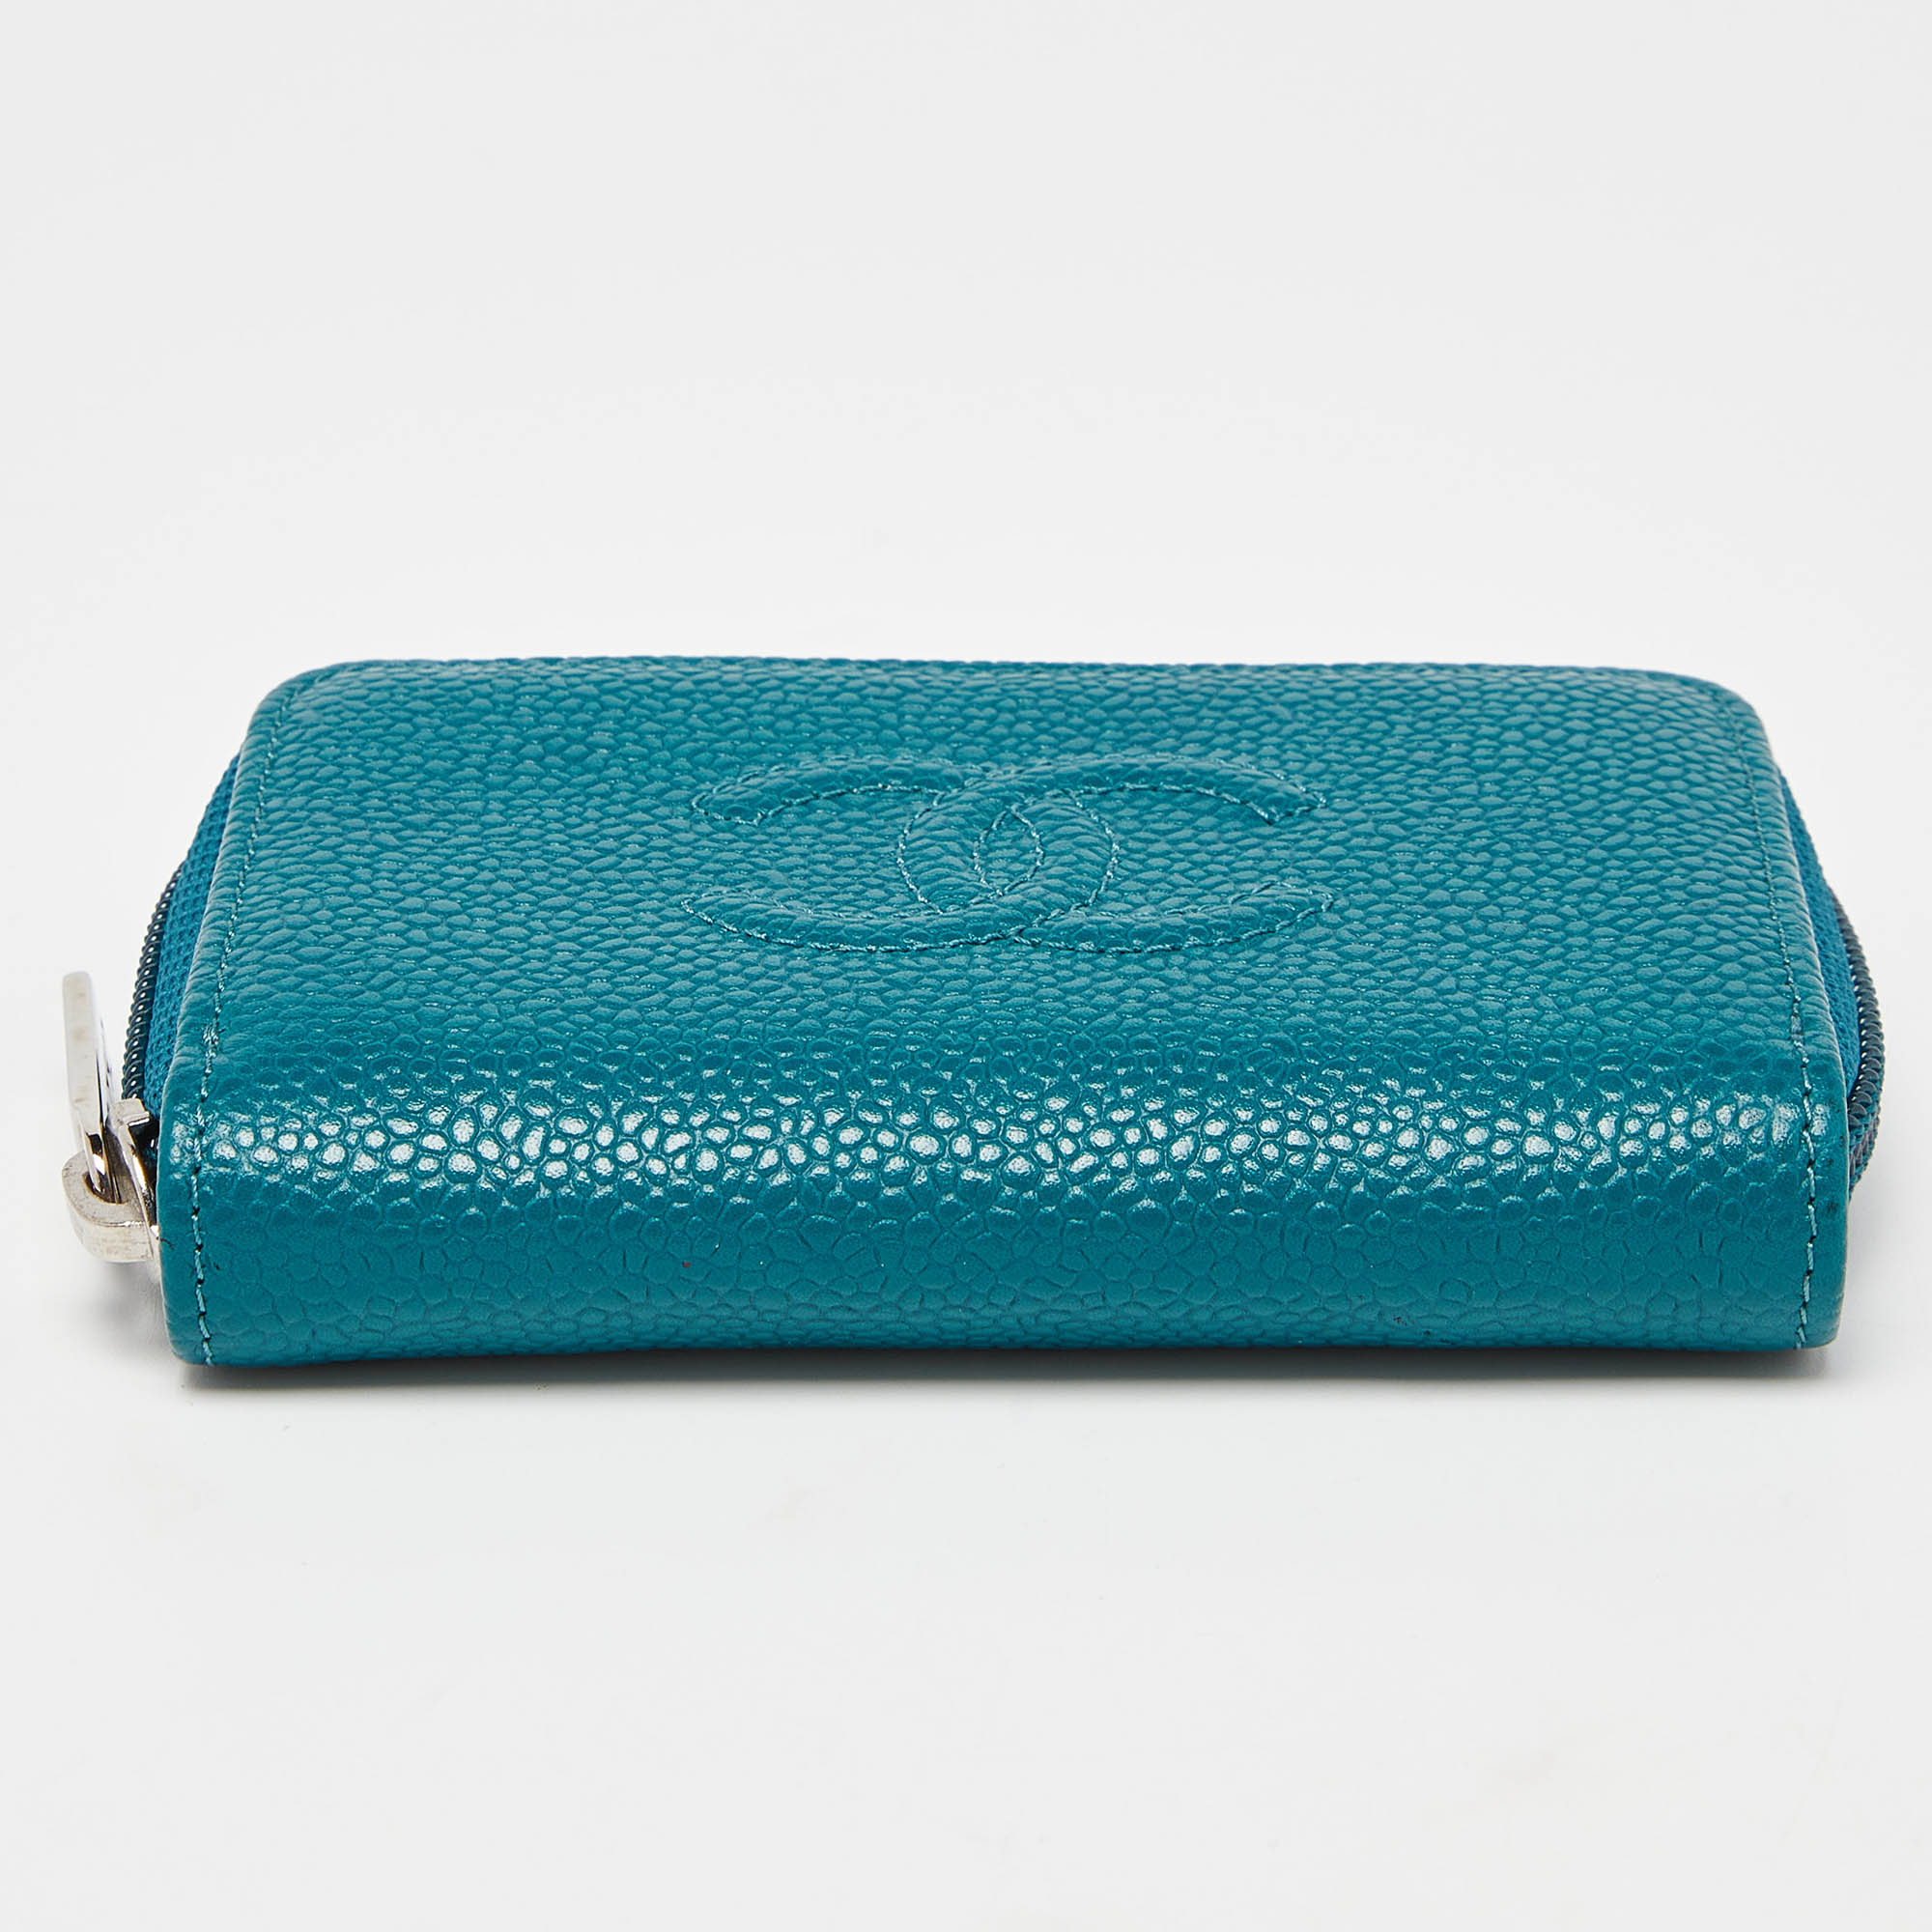 Chanel Teal Blue Caviar Leather CC Zip Coin Purse